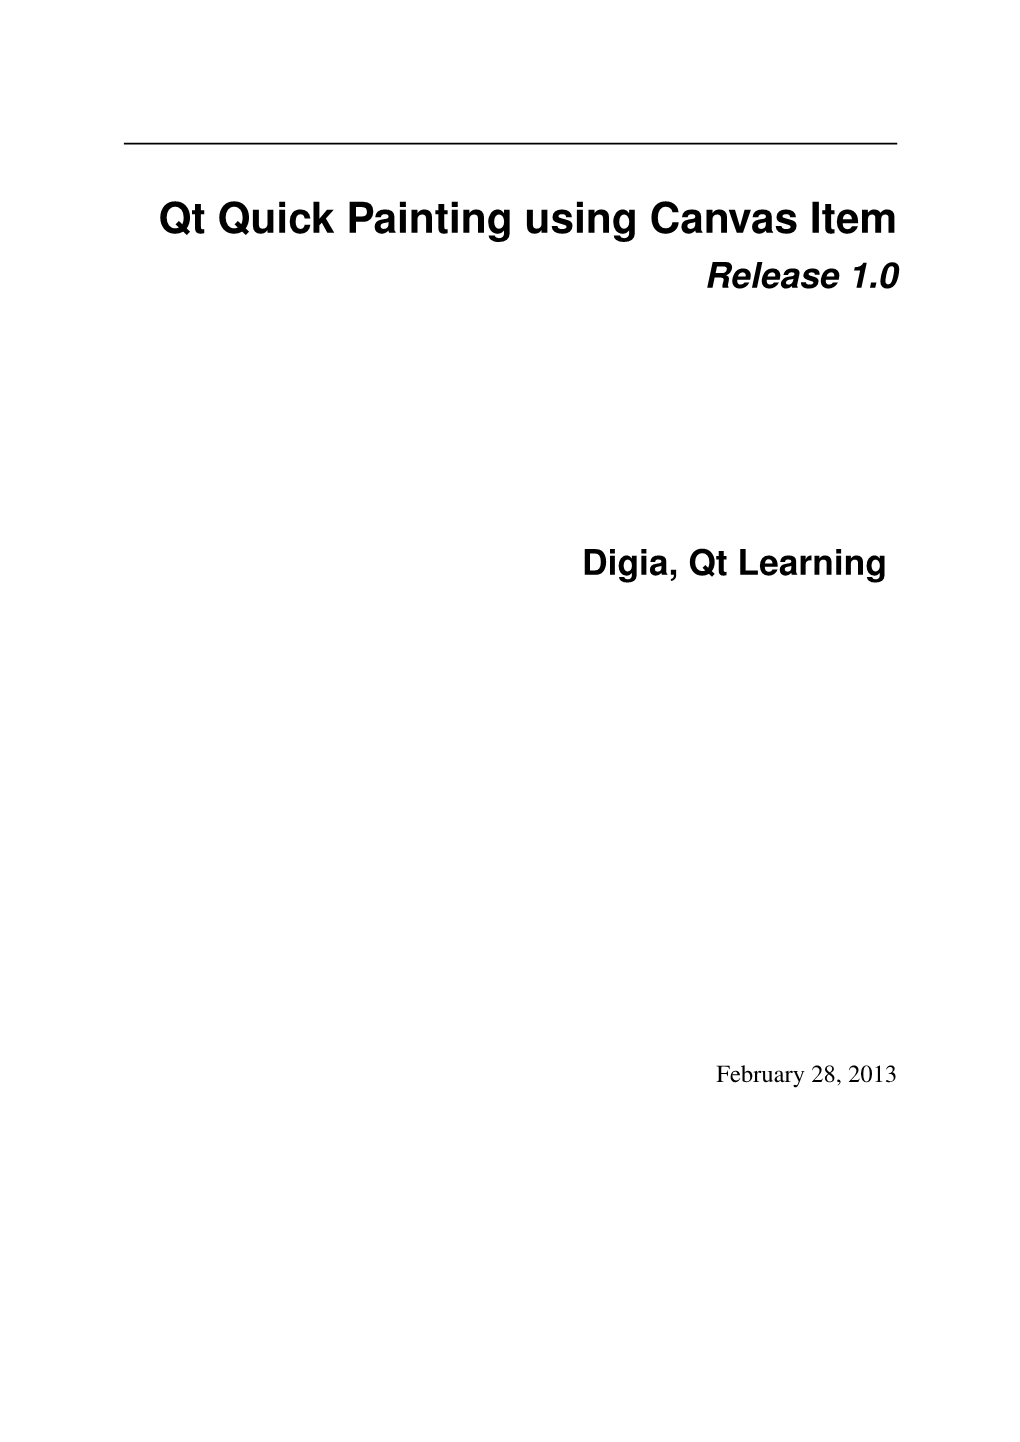 Qt Quick Painting Using Canvas Item Release 1.0